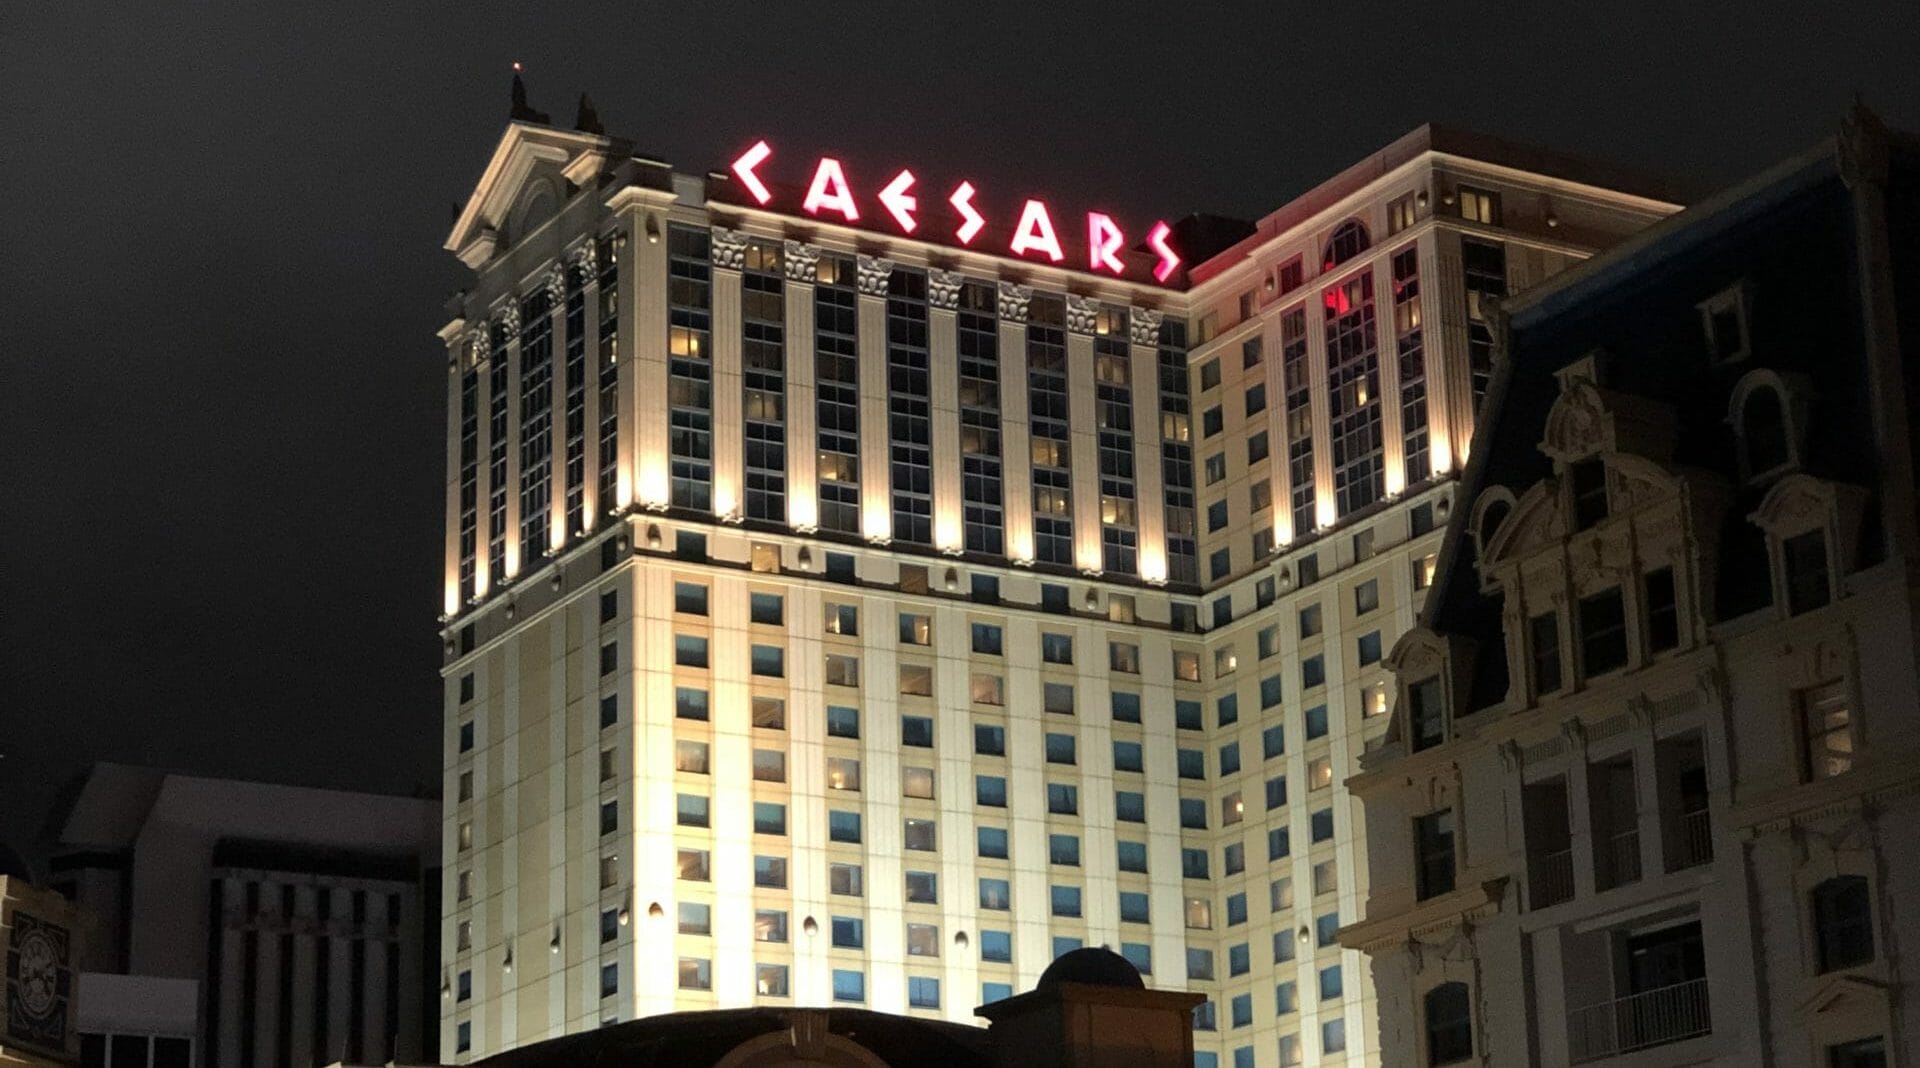 caesars atlantic city casino contact